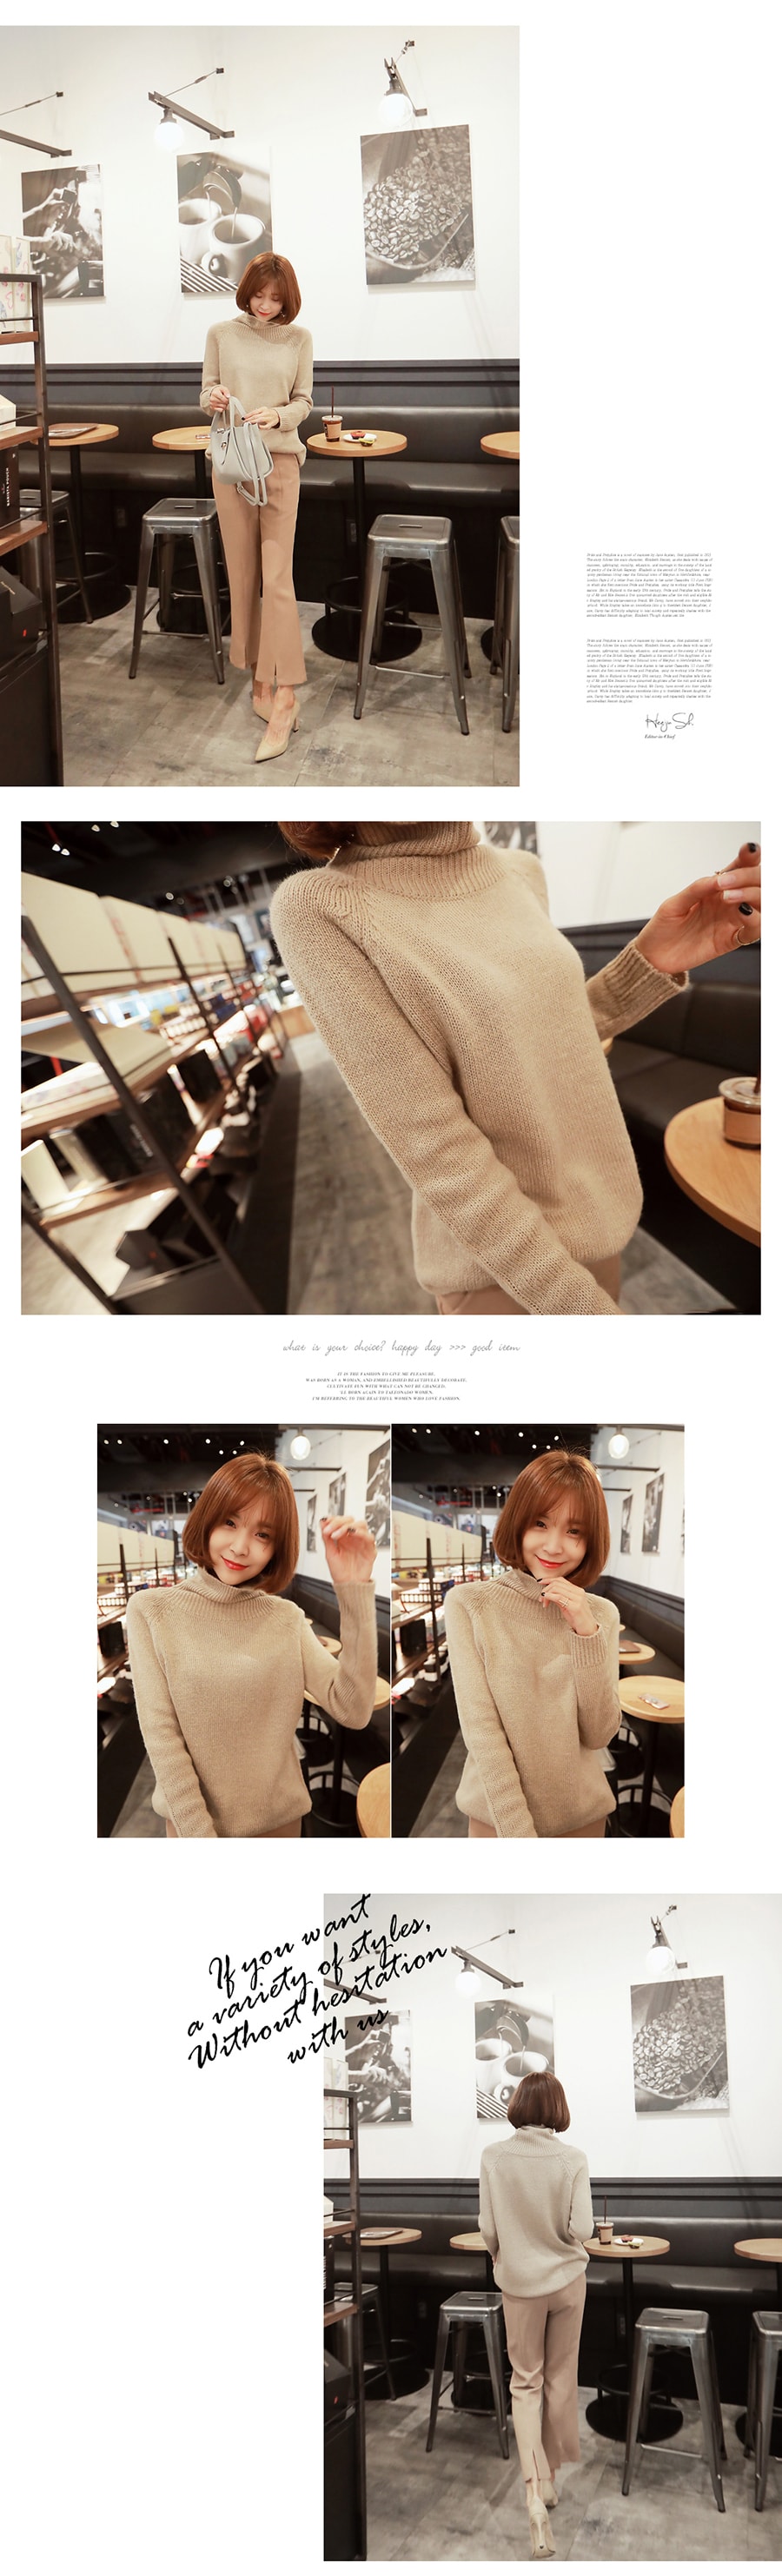 KOREA Loose Turtleneck Sweater Beige One Size(Free) [Free Shipping]